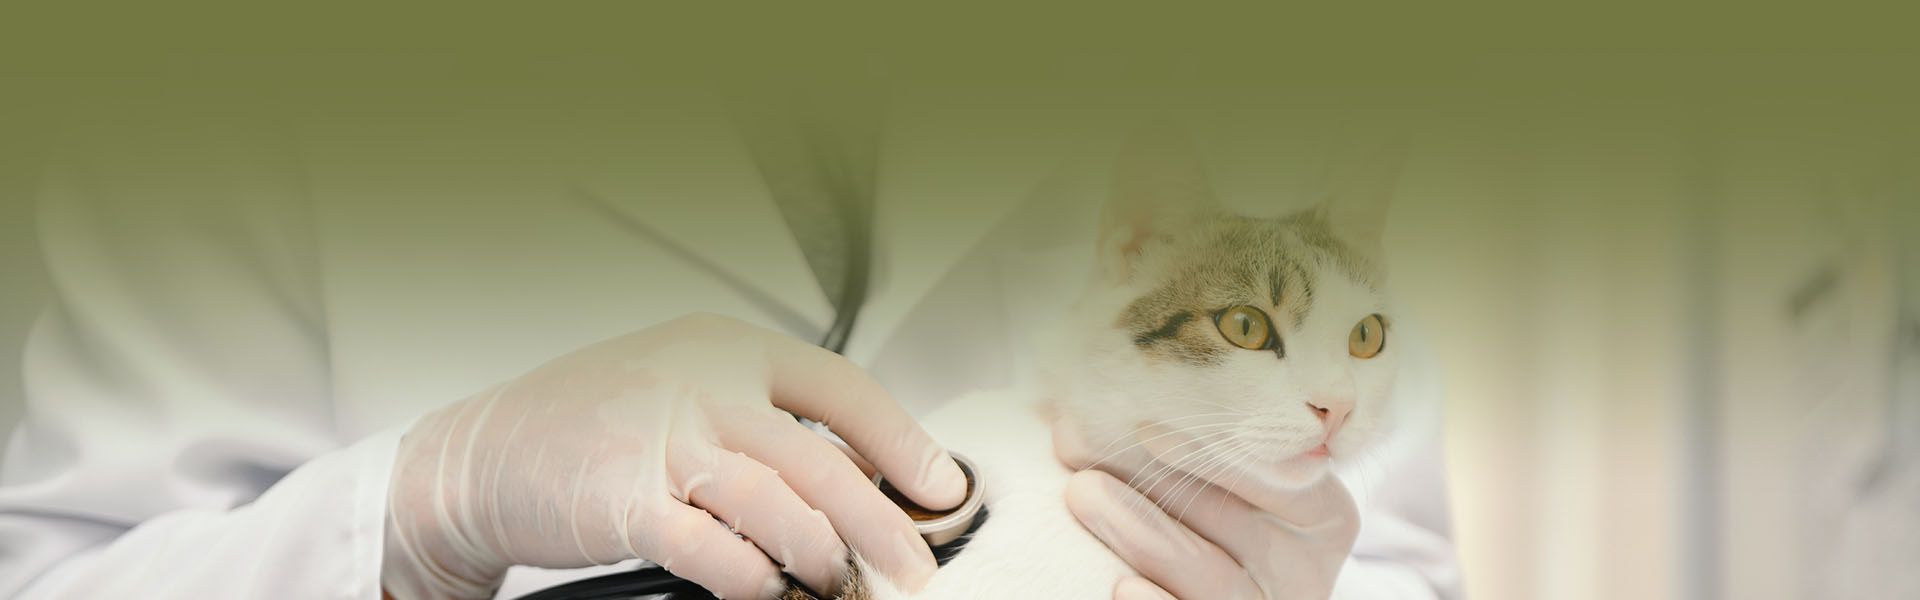 veterinarian doctor checking cat